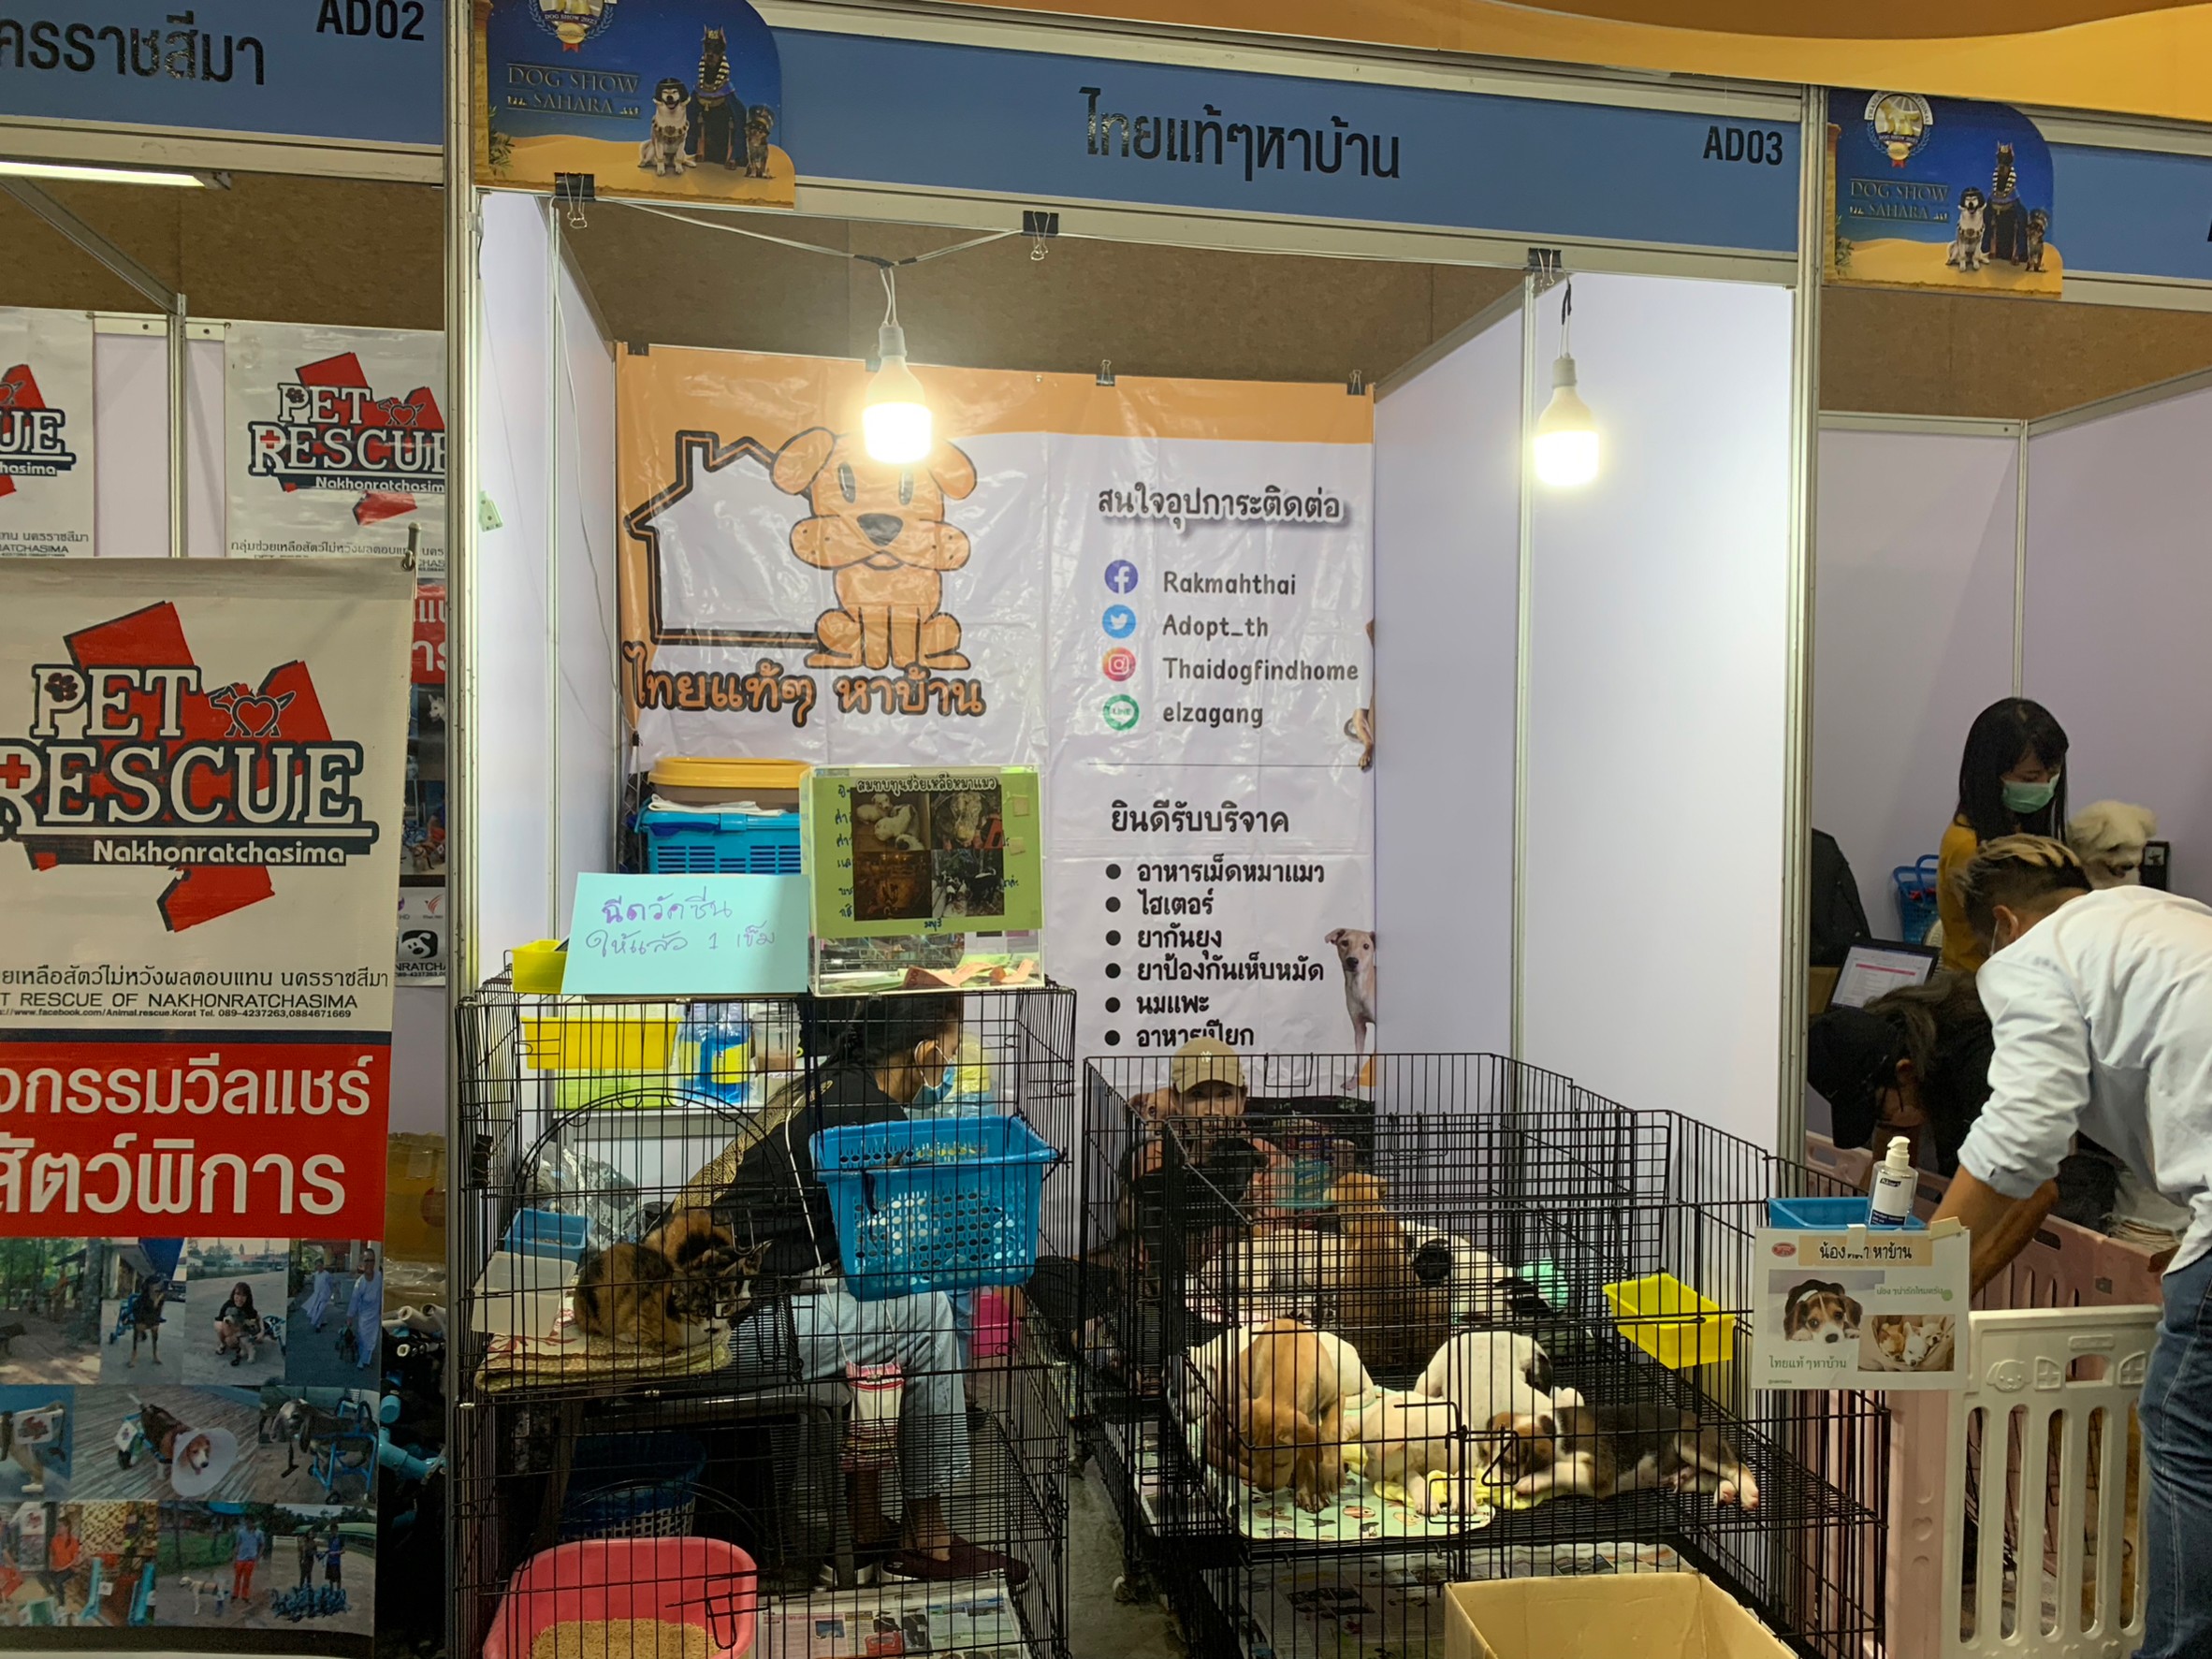 Dogilike.com :: Dogilike ¾ÒÊèÍ§â»Ãà´ç´ THAILAND INTERNATIONAL DOG SHOW 2023